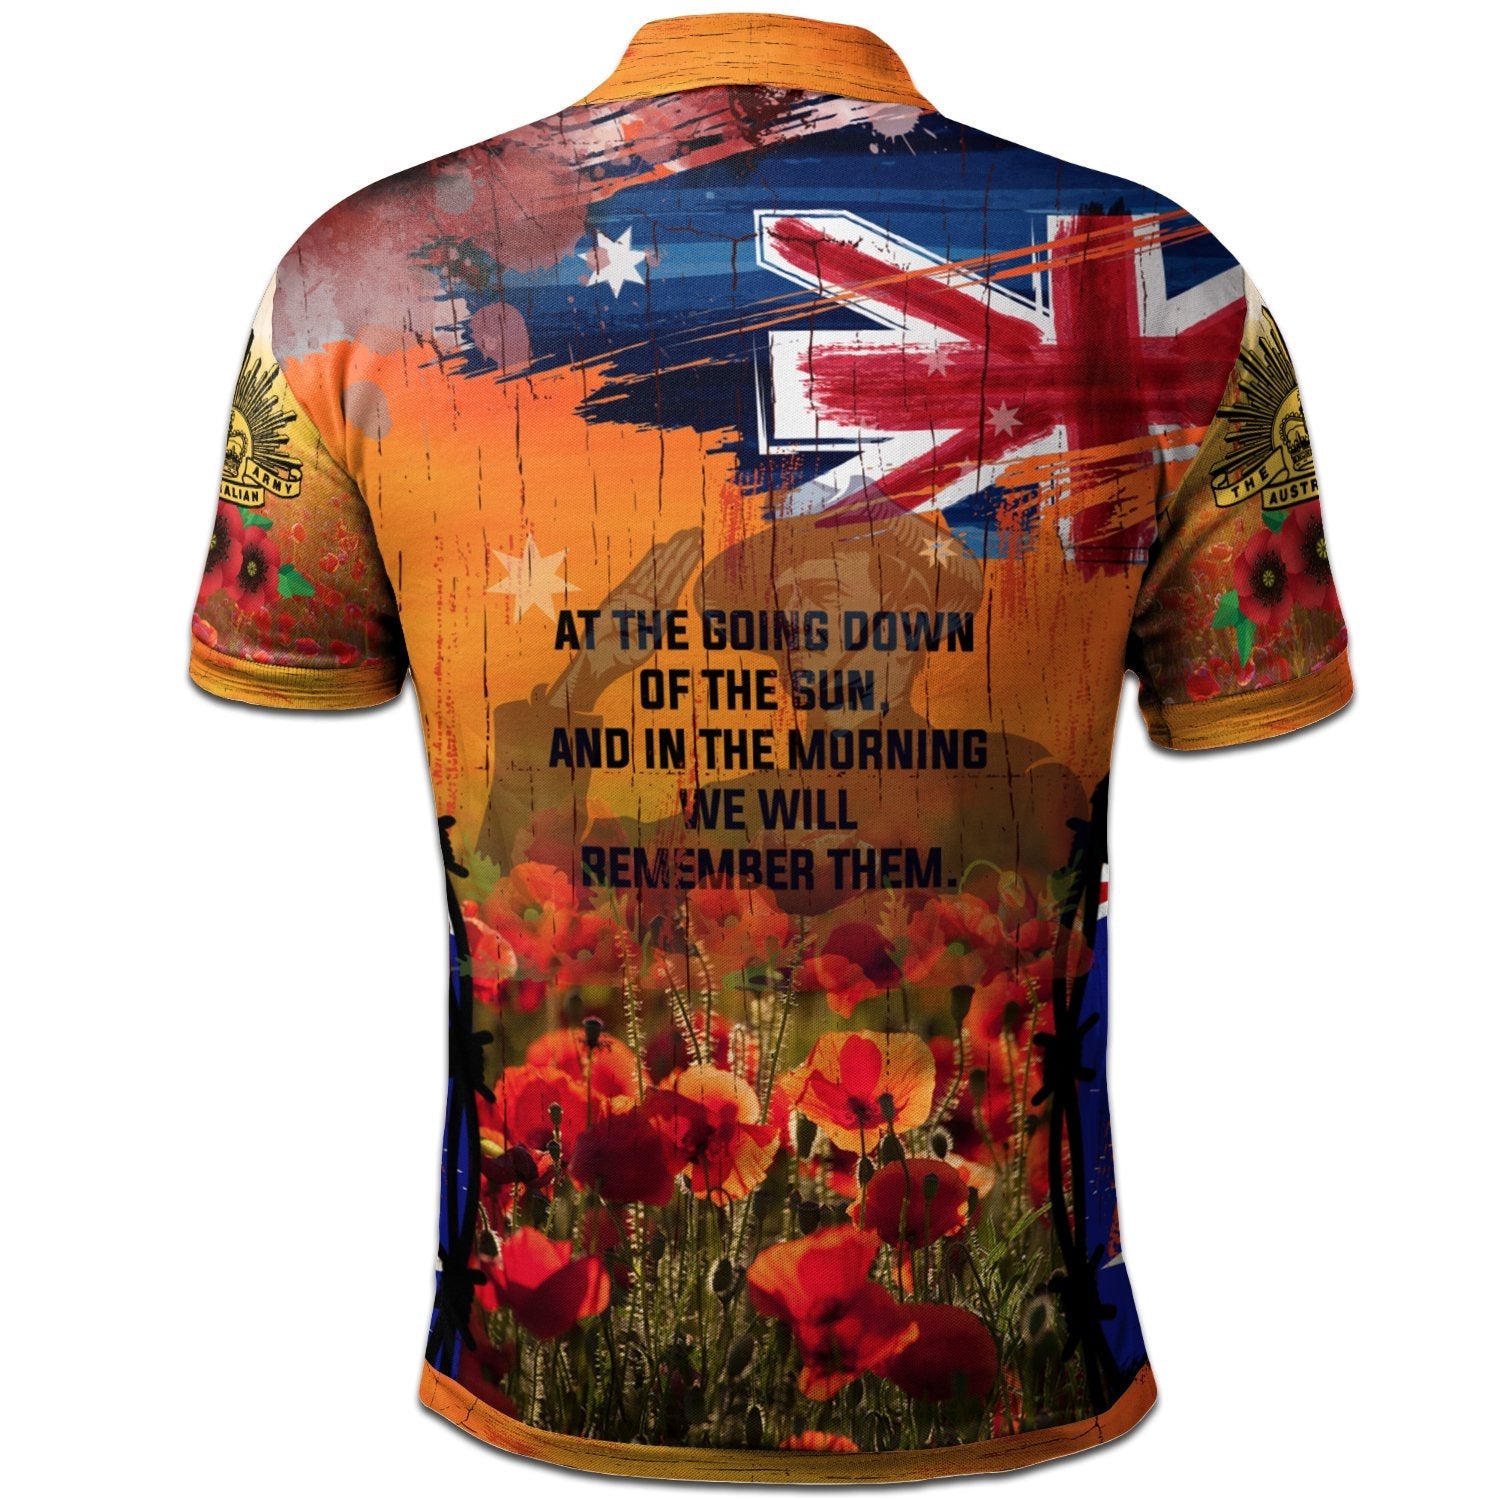 australia-anzac-day-2021-polo-shirt-anzac-day-commemoration-1939-1945